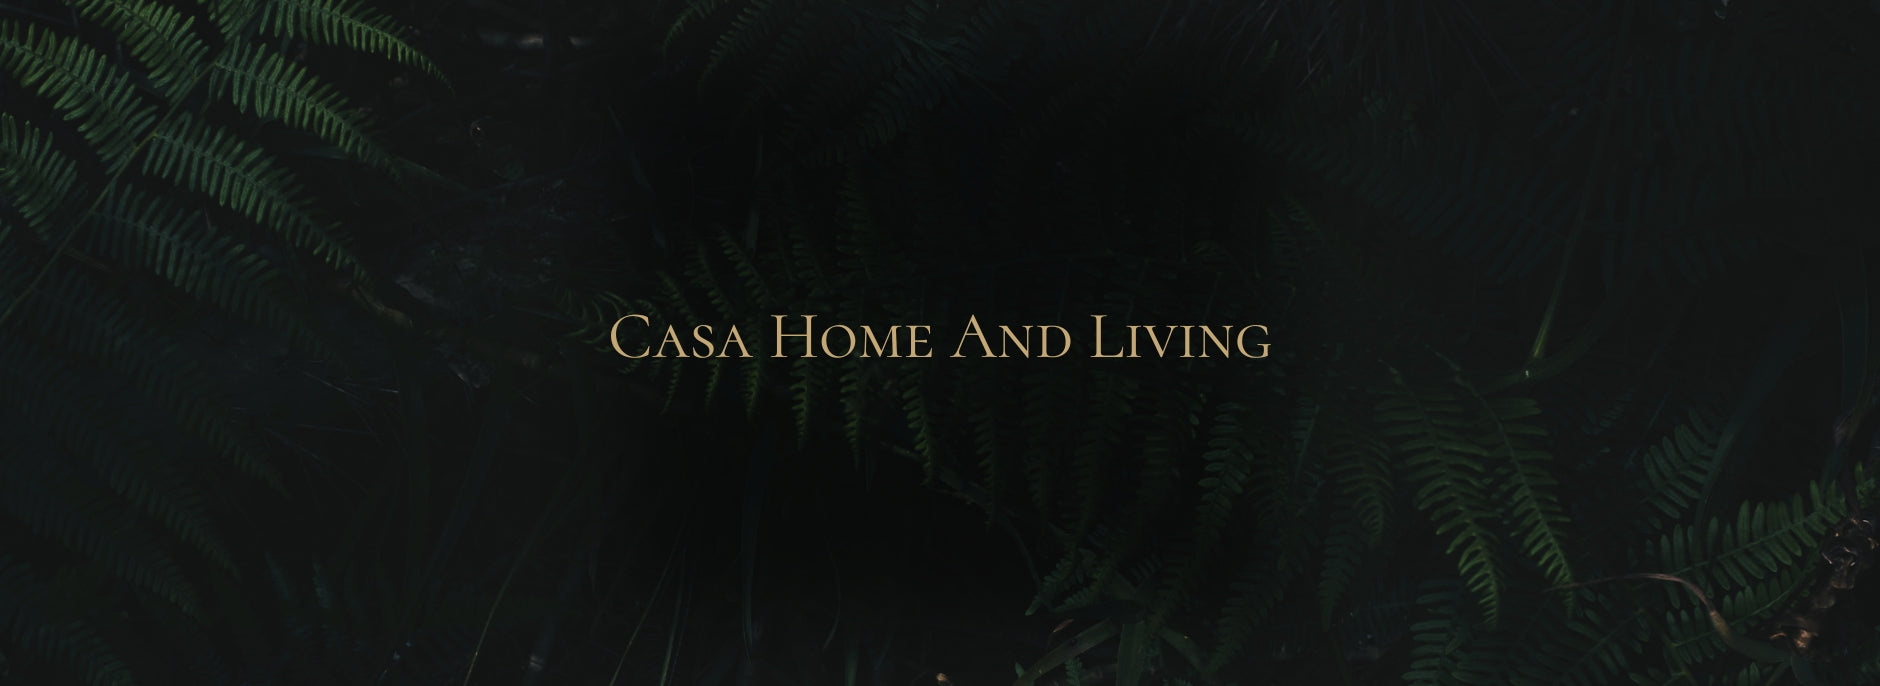 Casa Home and Living 